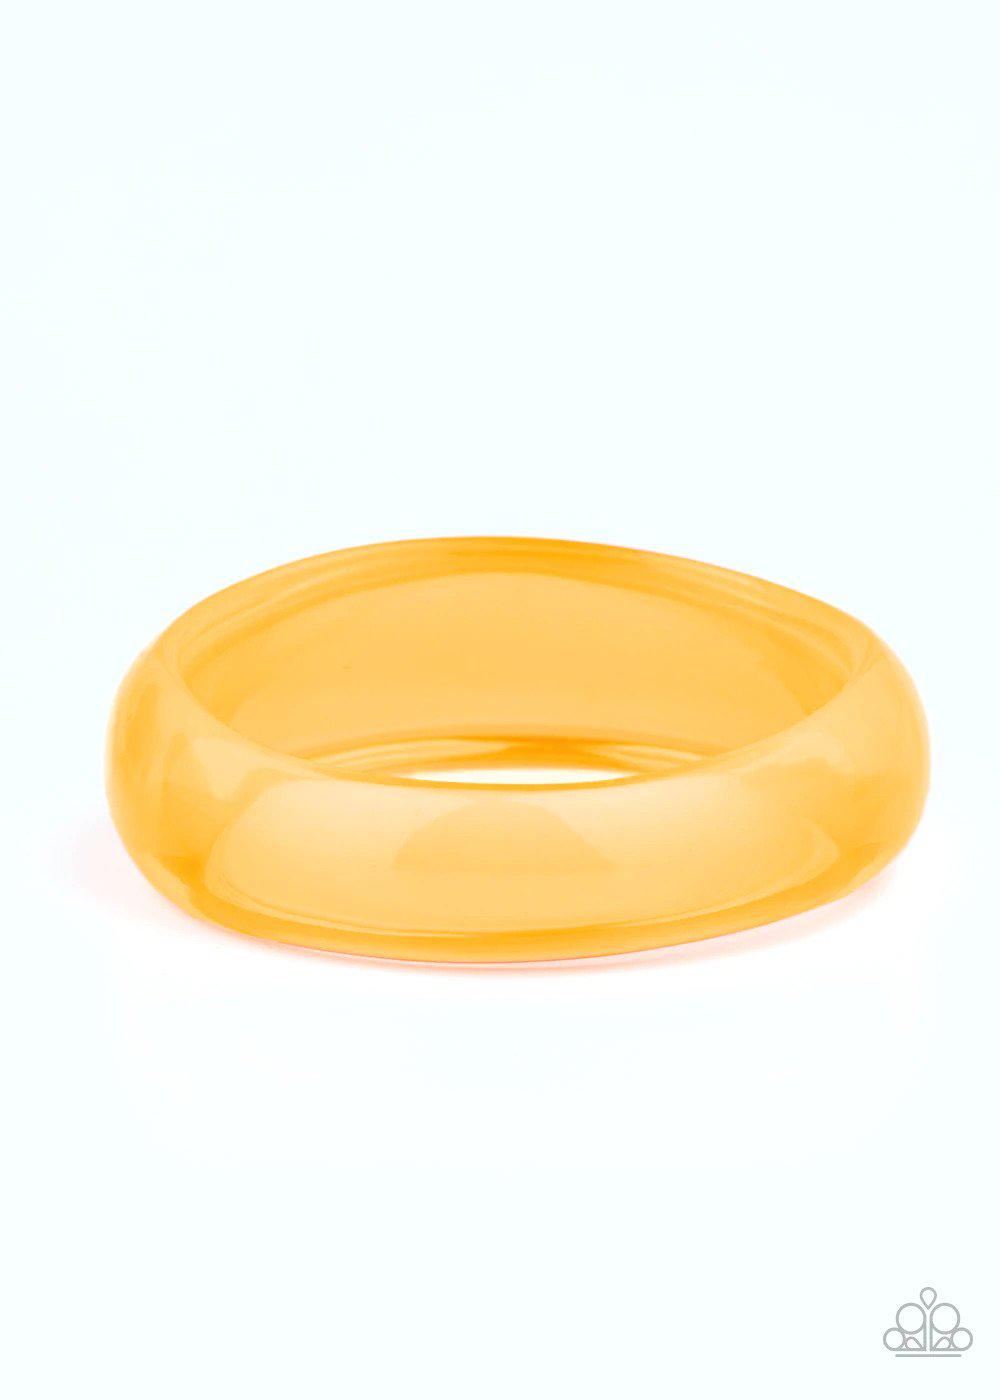 Major Material Girl Orange Bracelet - Paparazzi Accessories- lightbox - CarasShop.com - $5 Jewelry by Cara Jewels